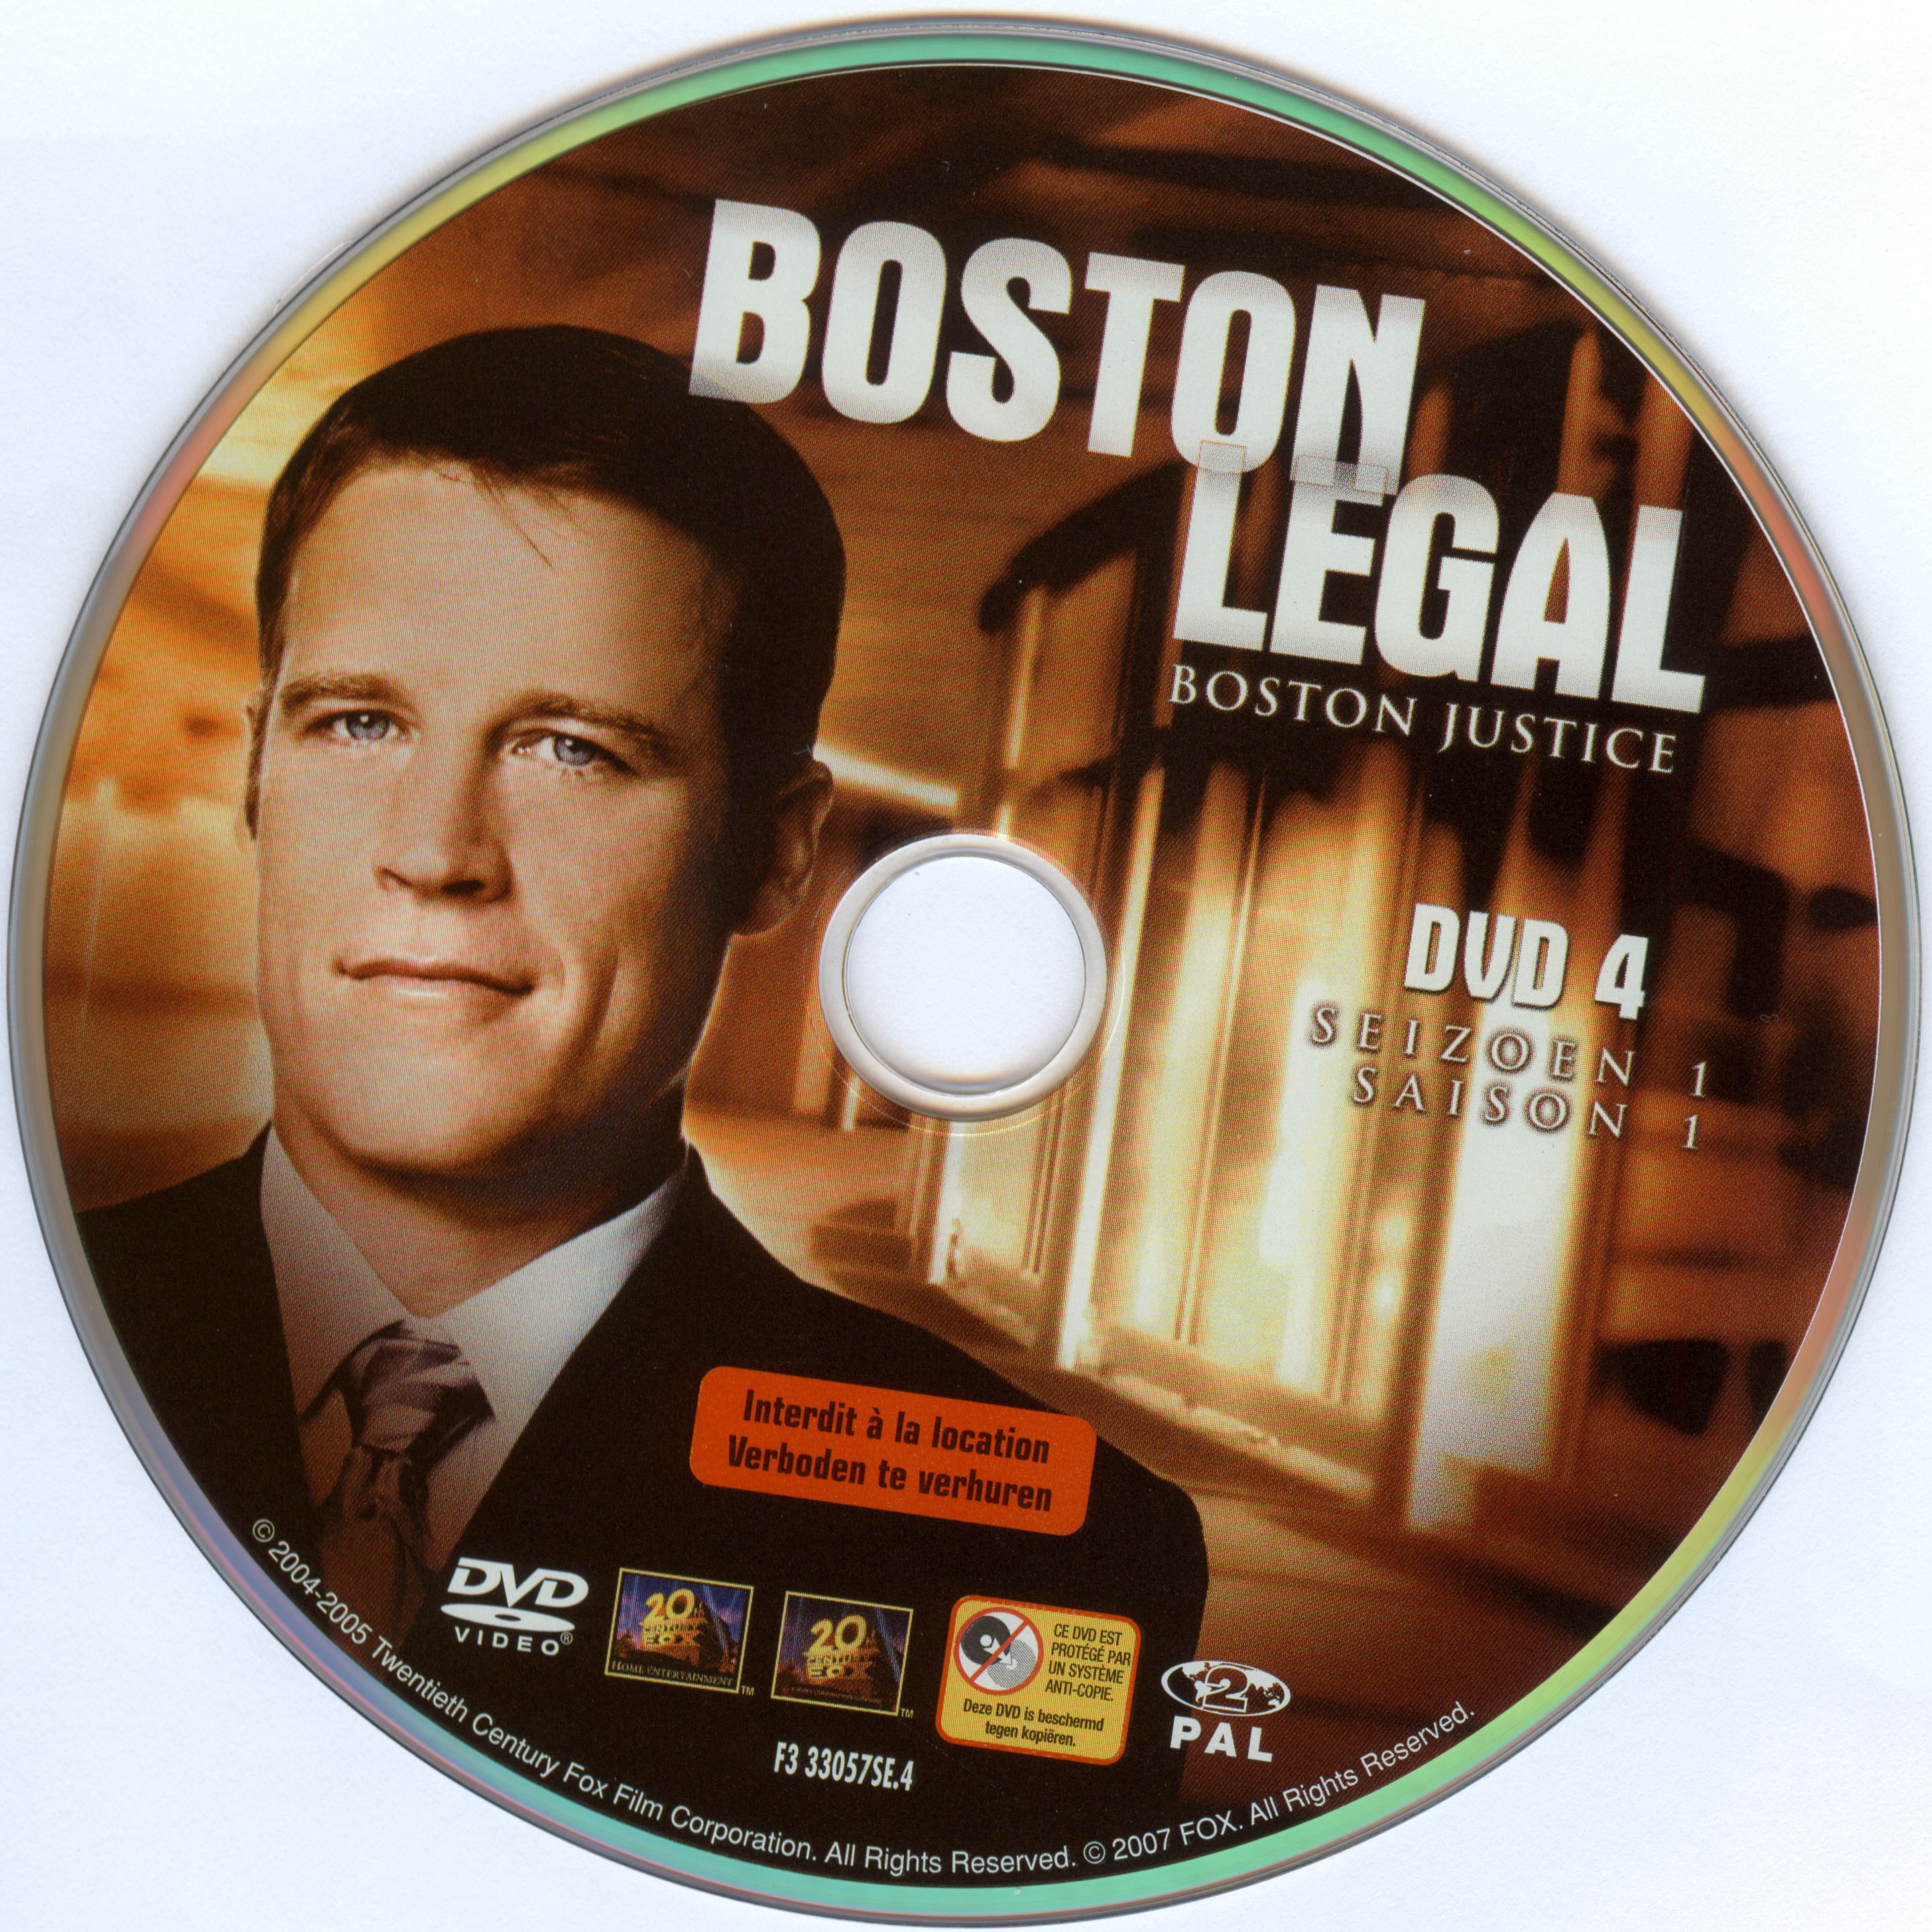 Boston legal - Boston justice Saison 1 DISC 4